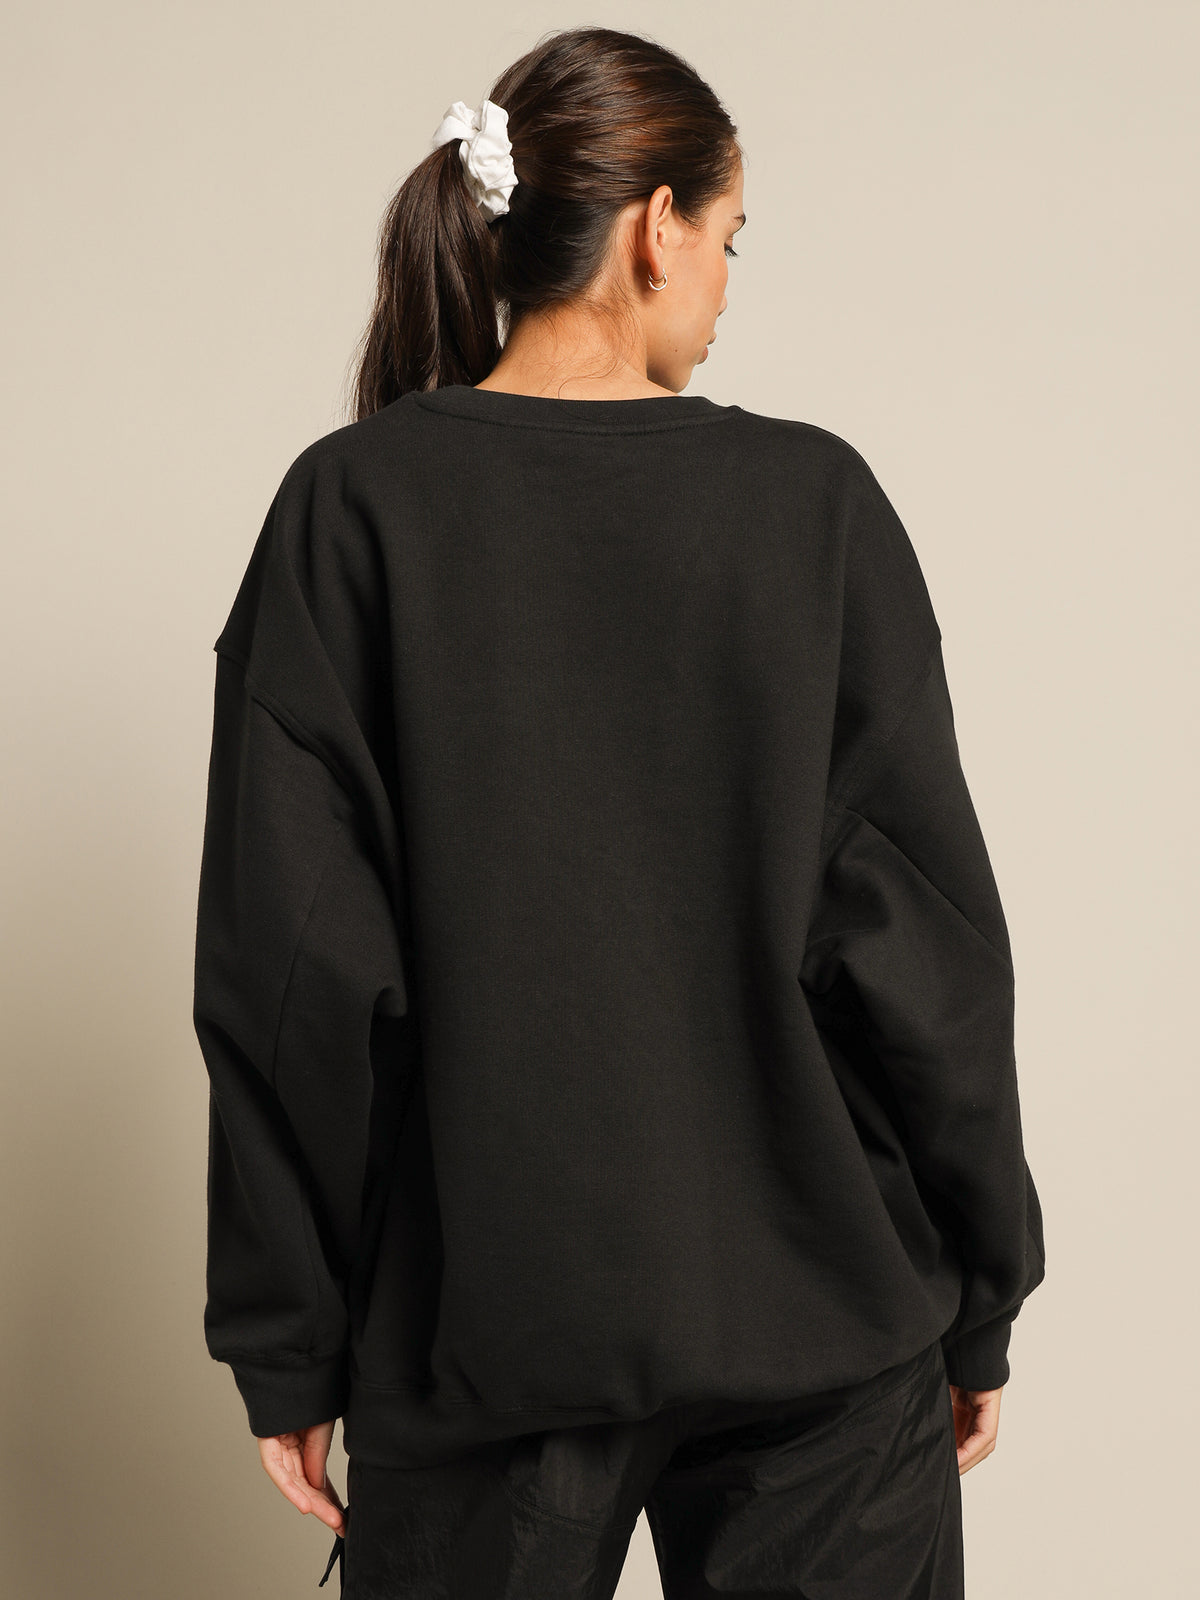 Adicolour Oversized Sweatshirt in Black